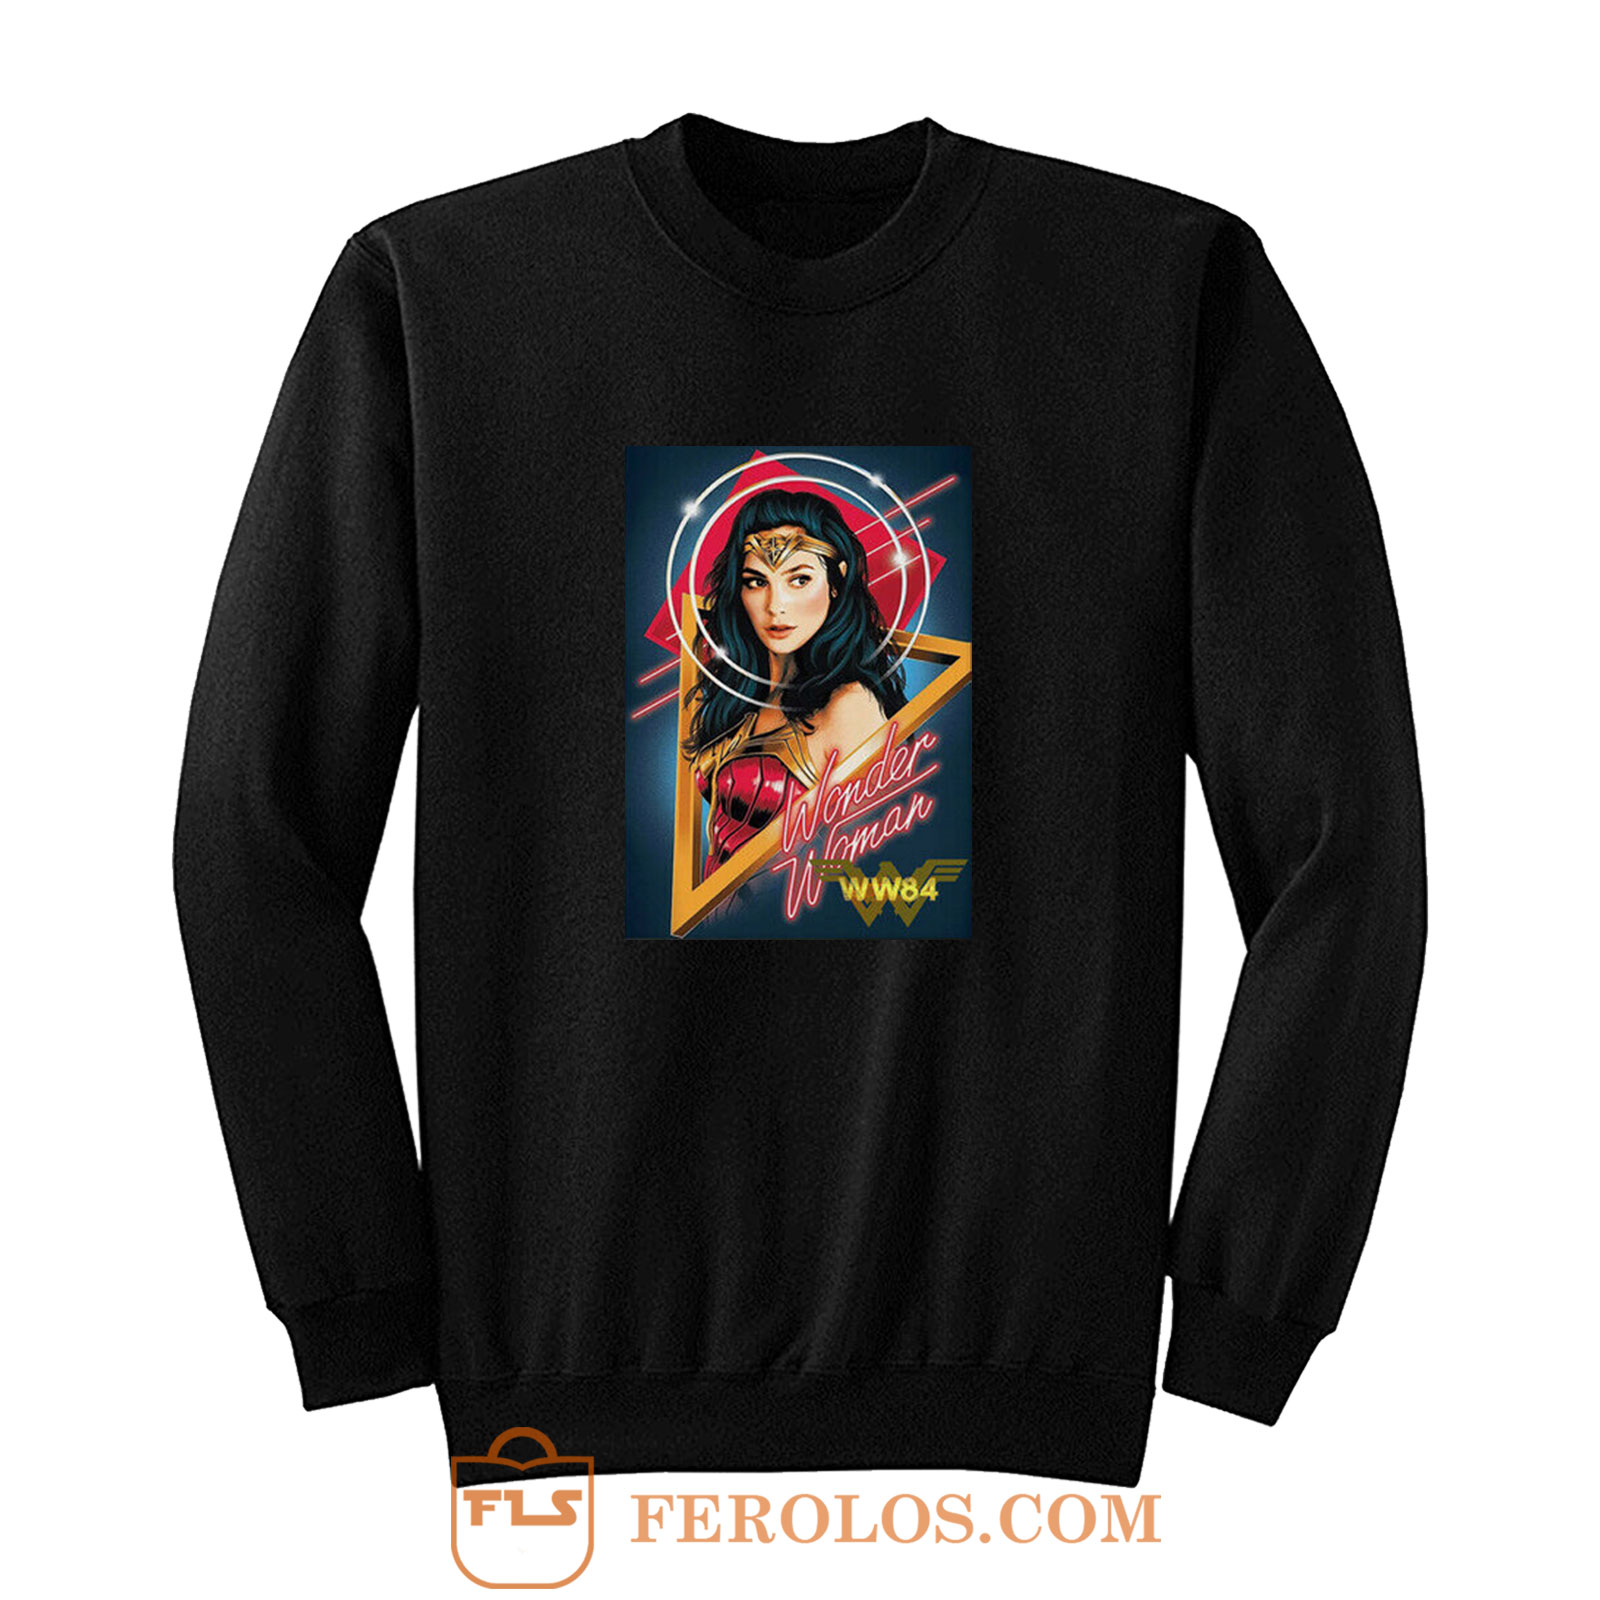 https://www.ferolos.com/wp-content/uploads/2020/07/Wonder-Woman-1984-Dc-Movie-Justice-League-Movie-2020-Sweatshirt.jpeg